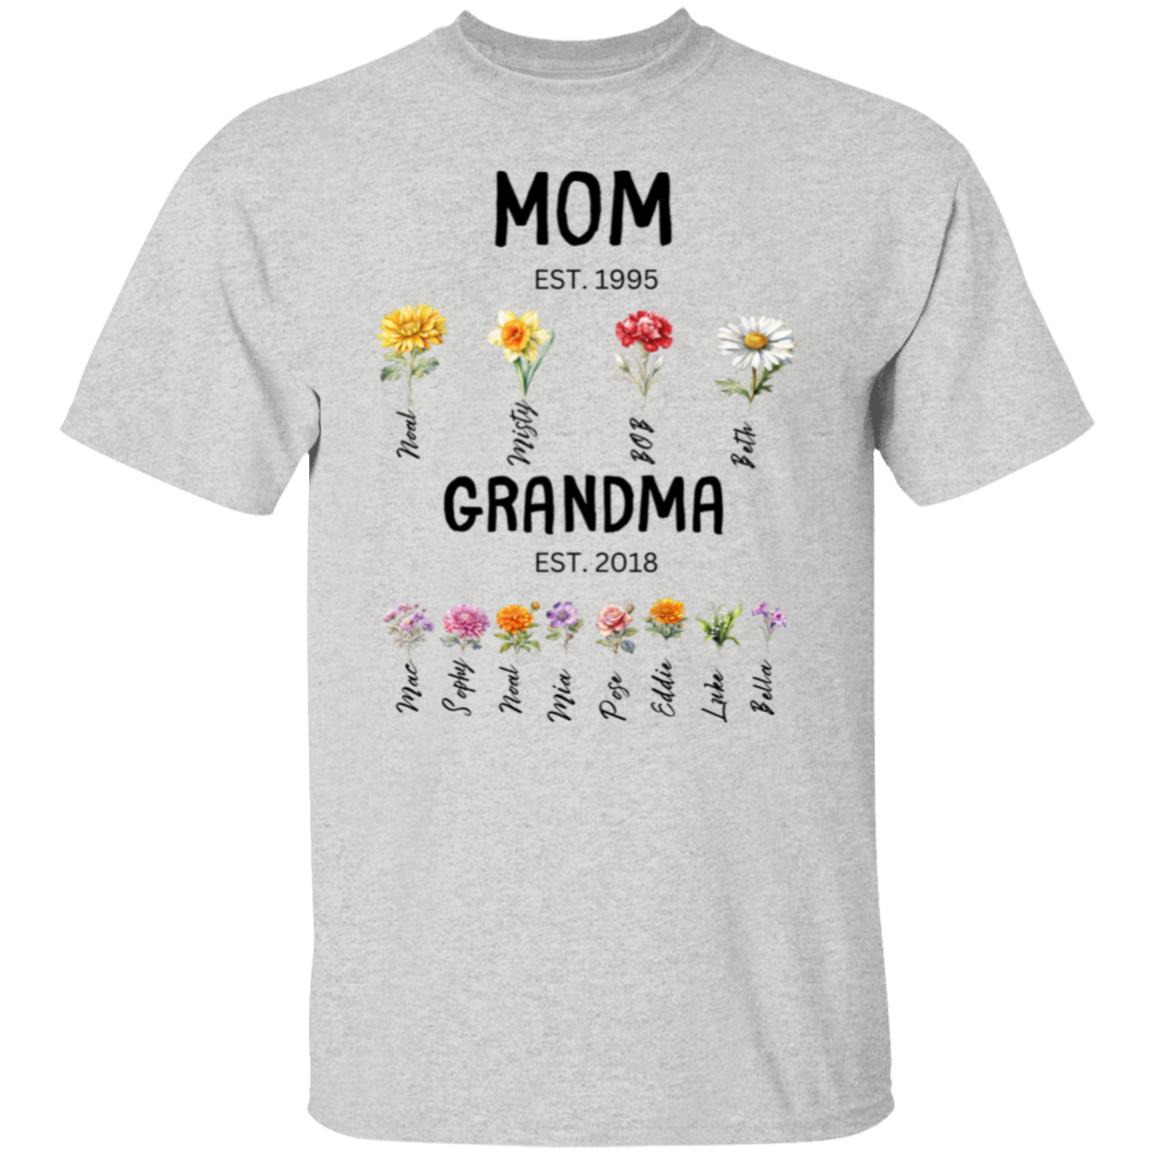 MomGrandma EST. Birth flowers Mom/Grandma Est. birth flowers Tees Shirt